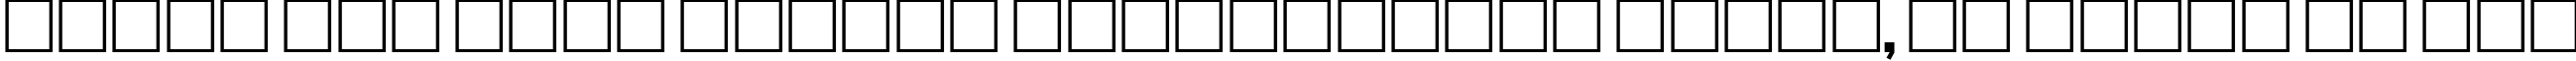 Пример написания шрифтом Rubic текста на русском